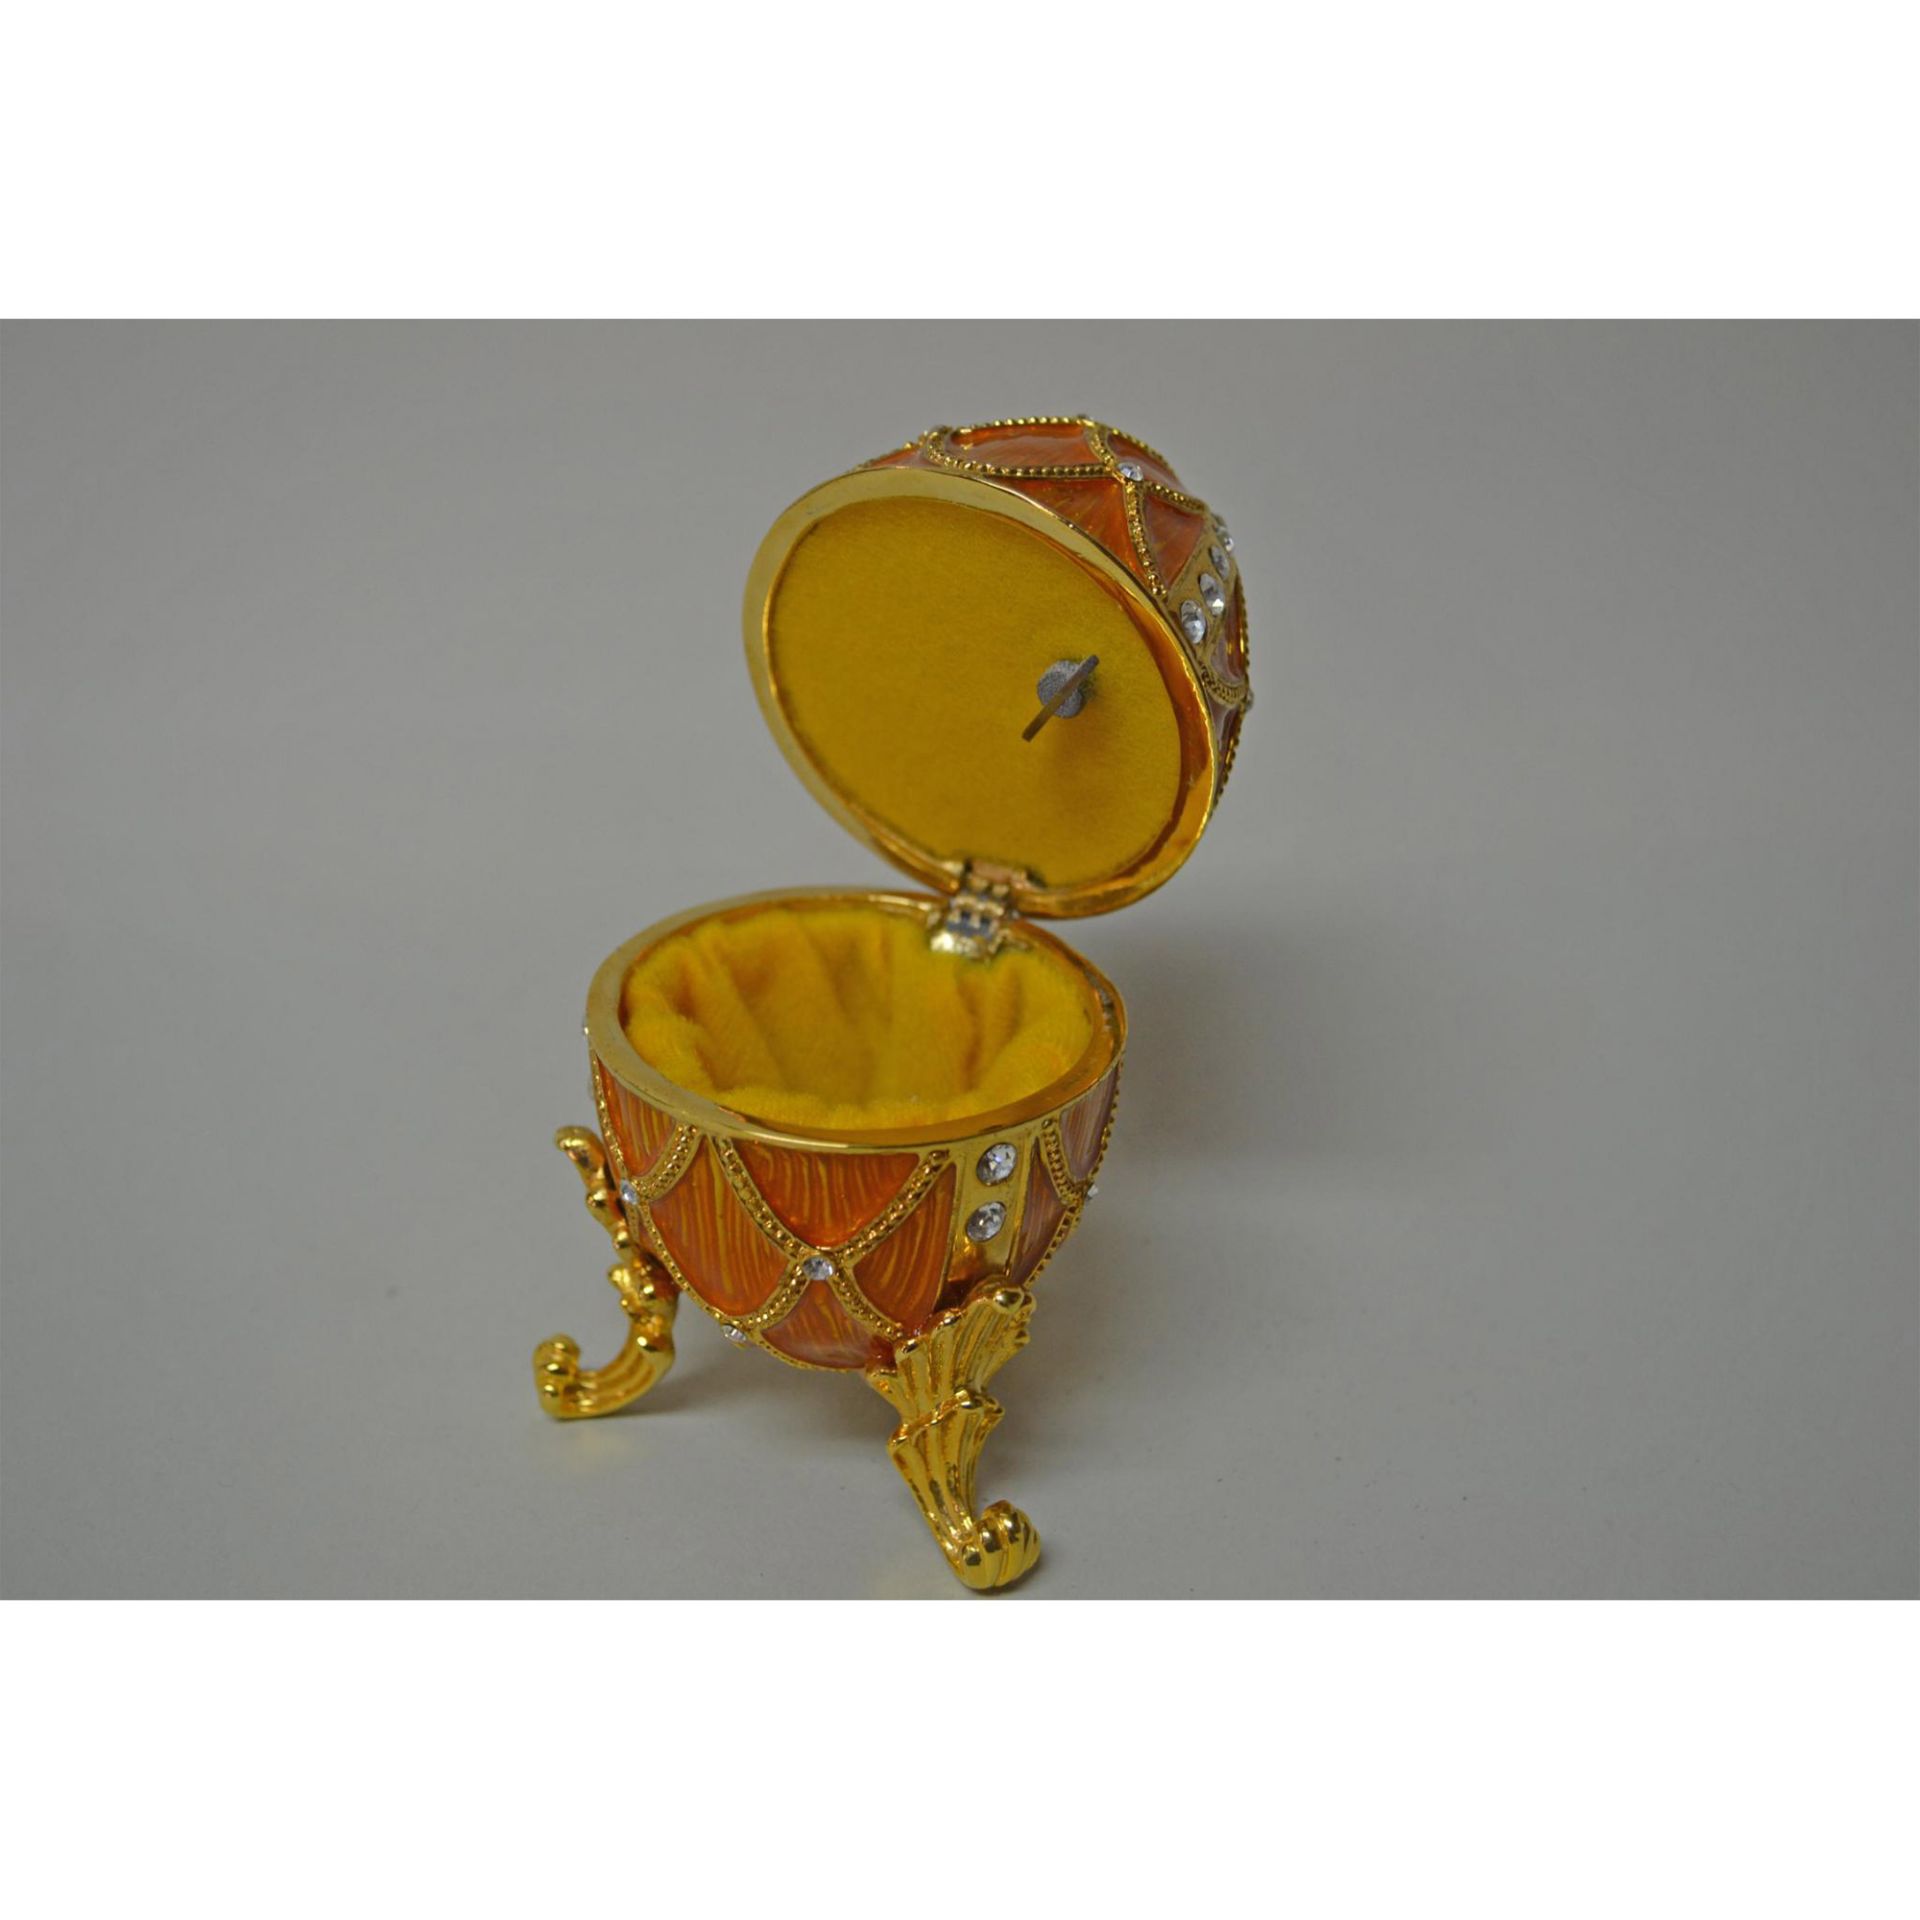 Gold Enamel Egg Musical Jewelry Box - Image 2 of 3